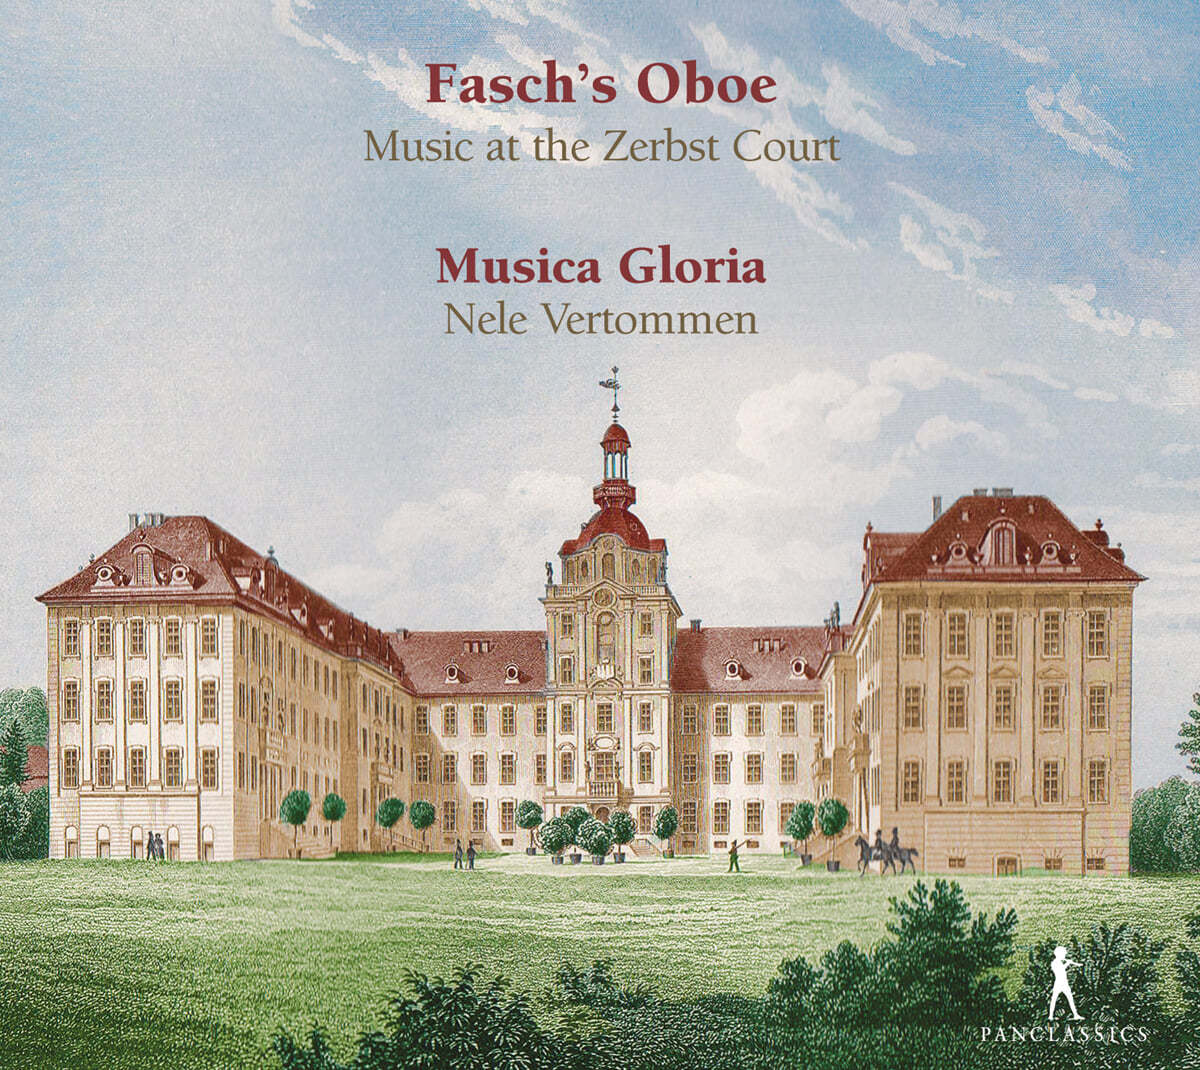 Musica Gloria 요한 프리드리히 파슈: 오보에 협주곡 - 체르프스트 궁정의 음악 (Fasch&#39;s Oboe - Music At the Zerbst Court)